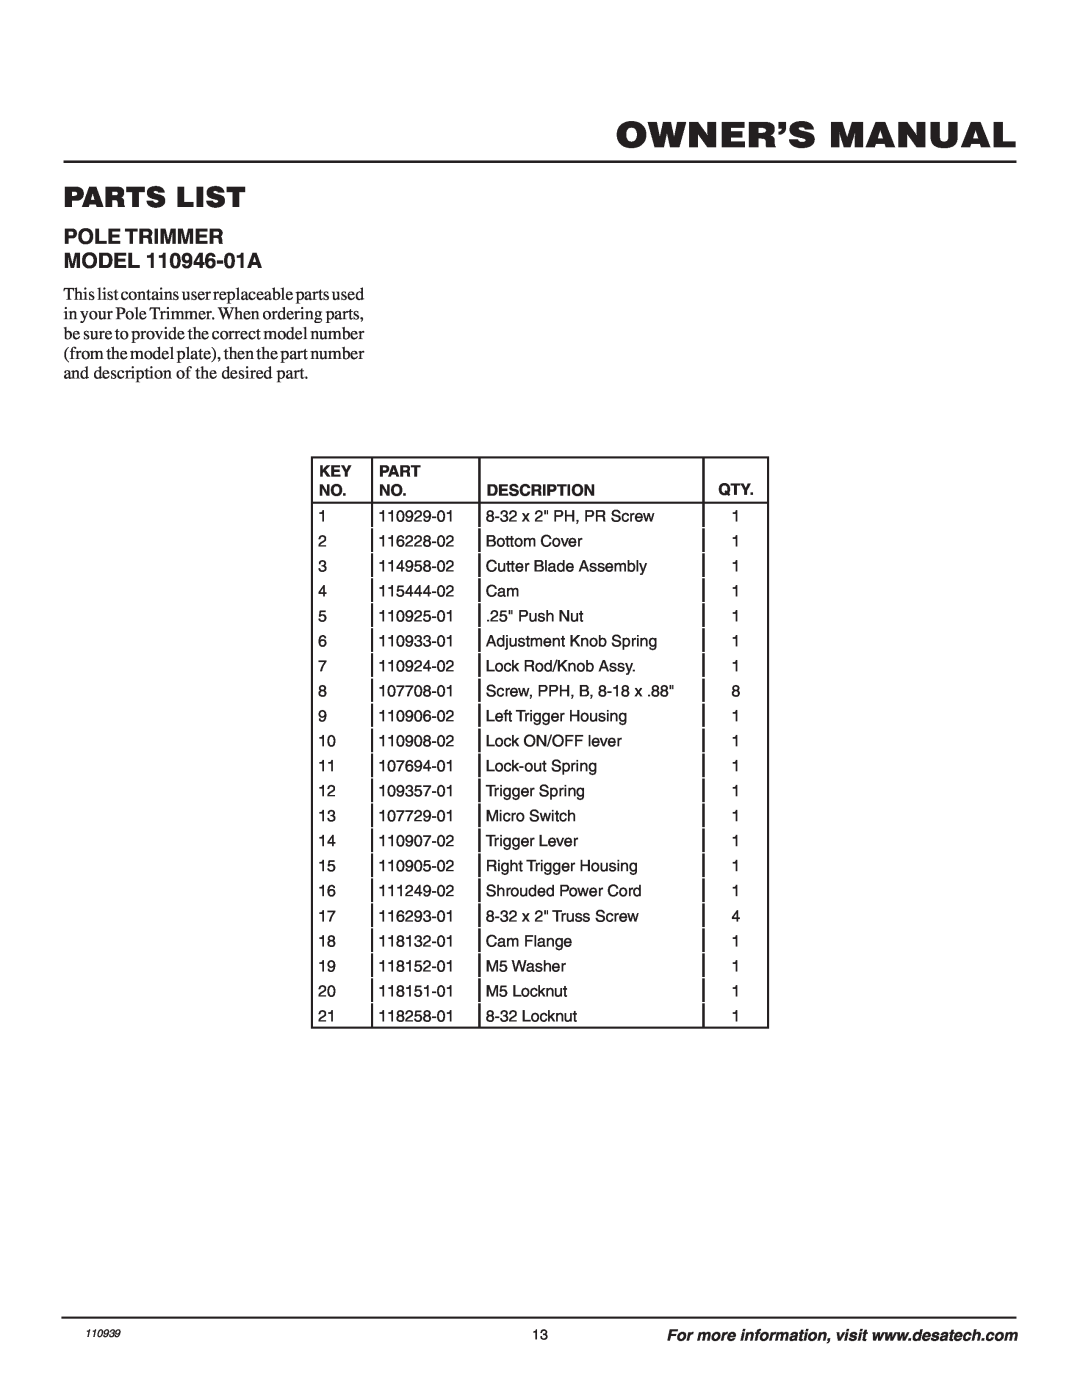 Remington owner manual Parts List, POLE TRIMMER MODEL 110946-01A 